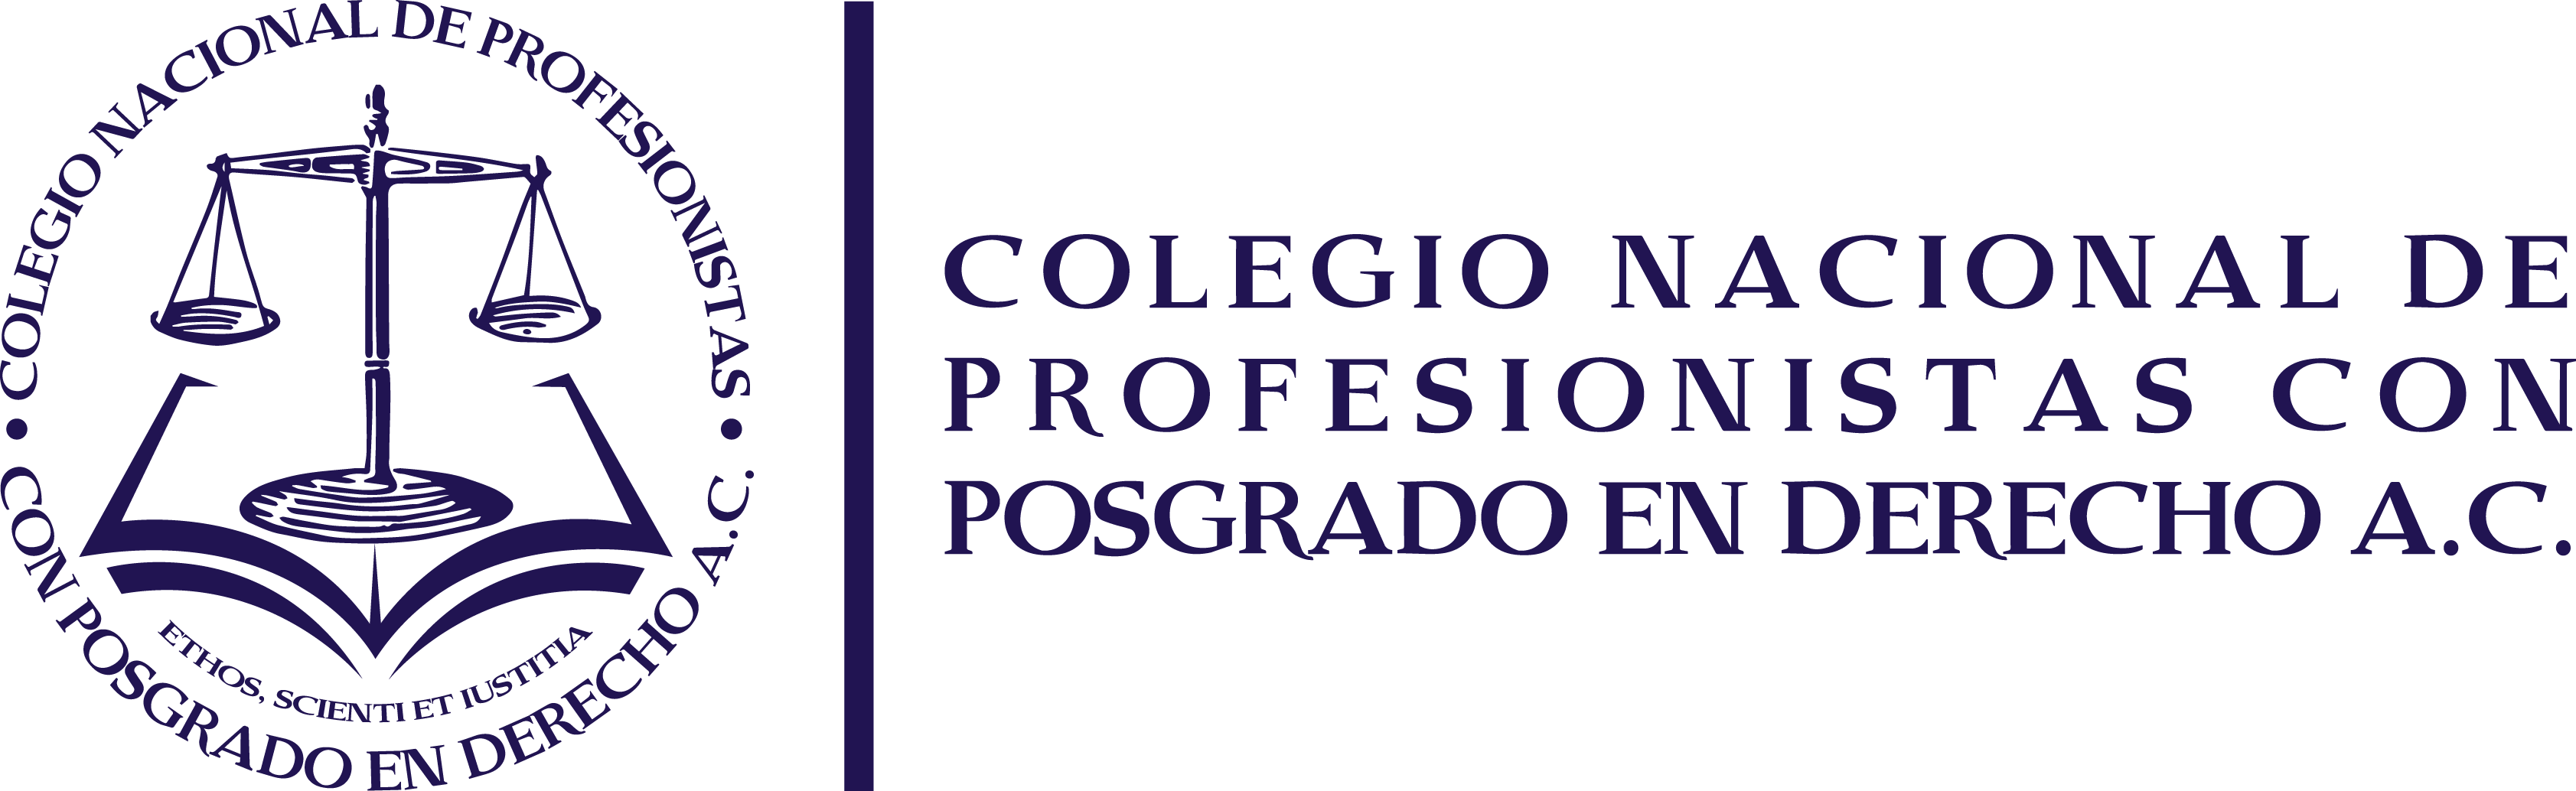 CNPPD logo